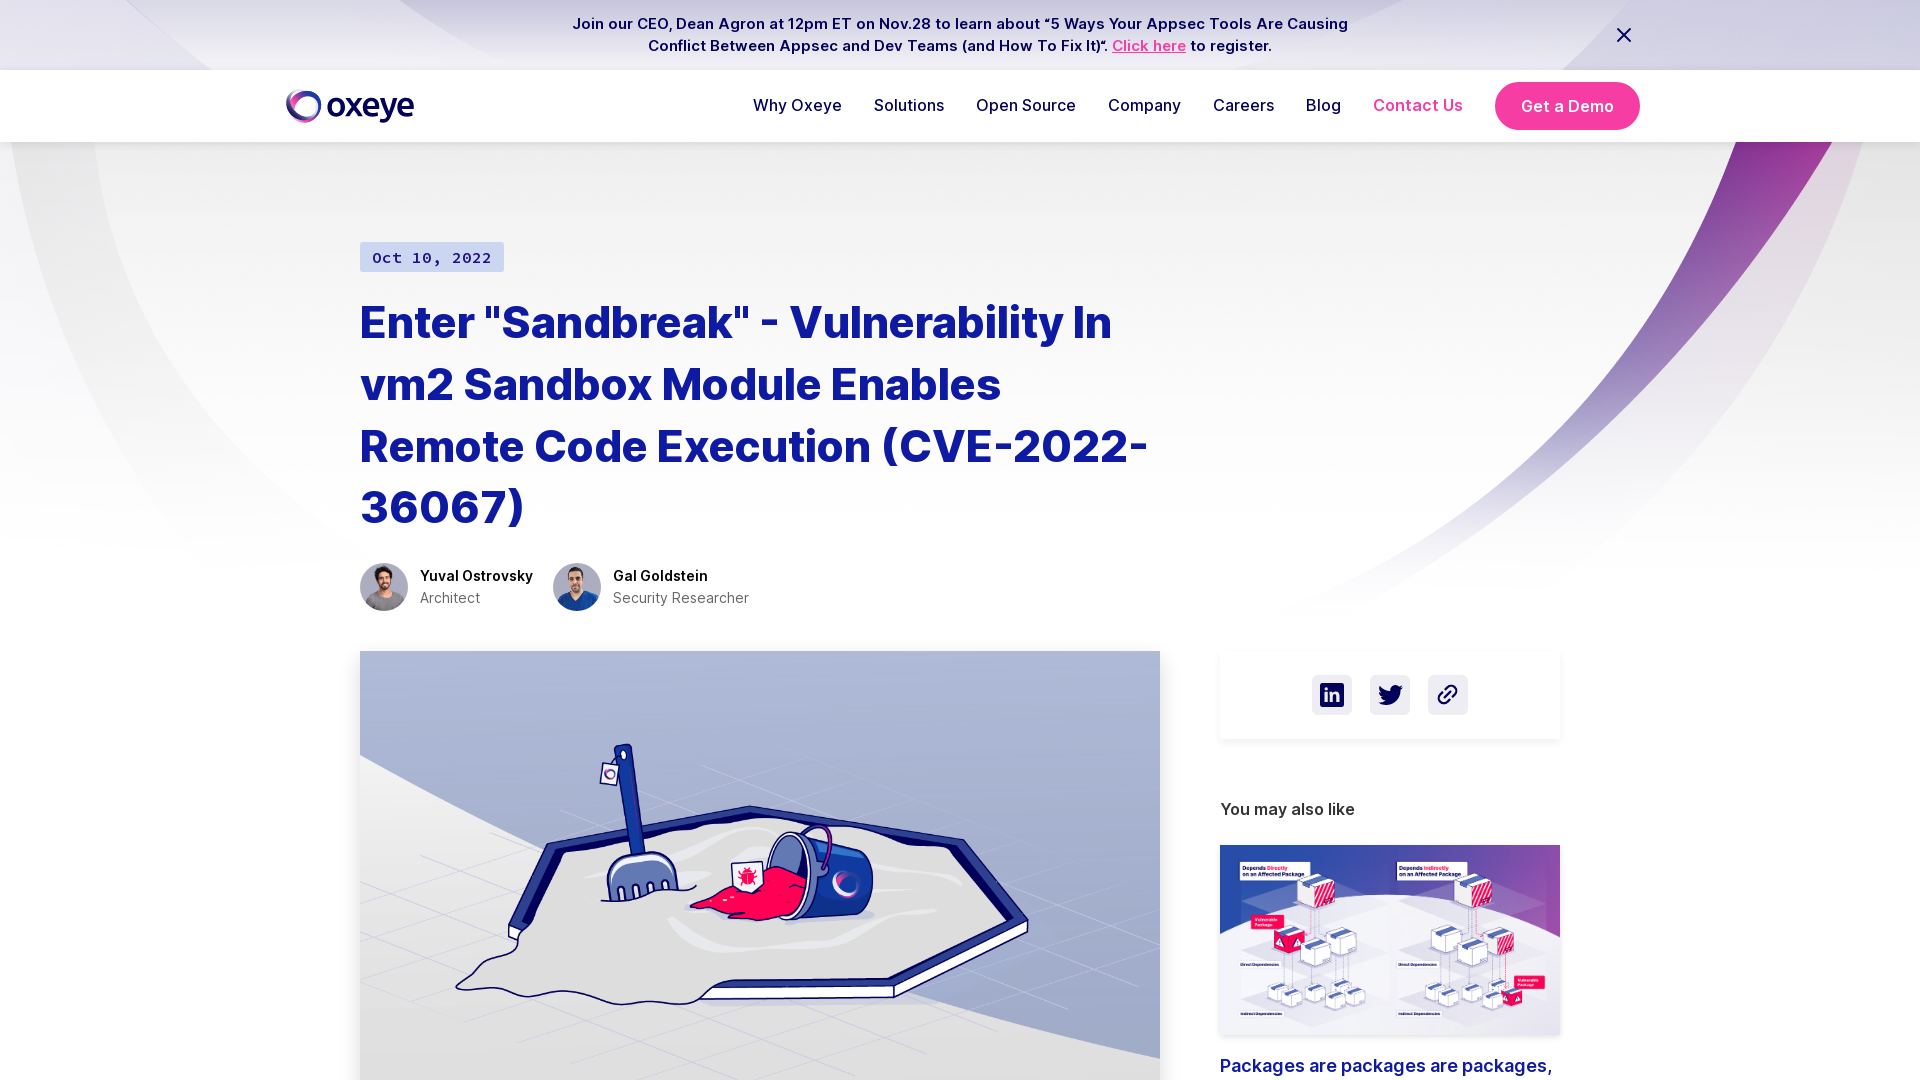 Enter "Sandbreak" - Vulnerability In vm2 Sandbox Module Enables Remote Code Execution (CVE-2022-36067)